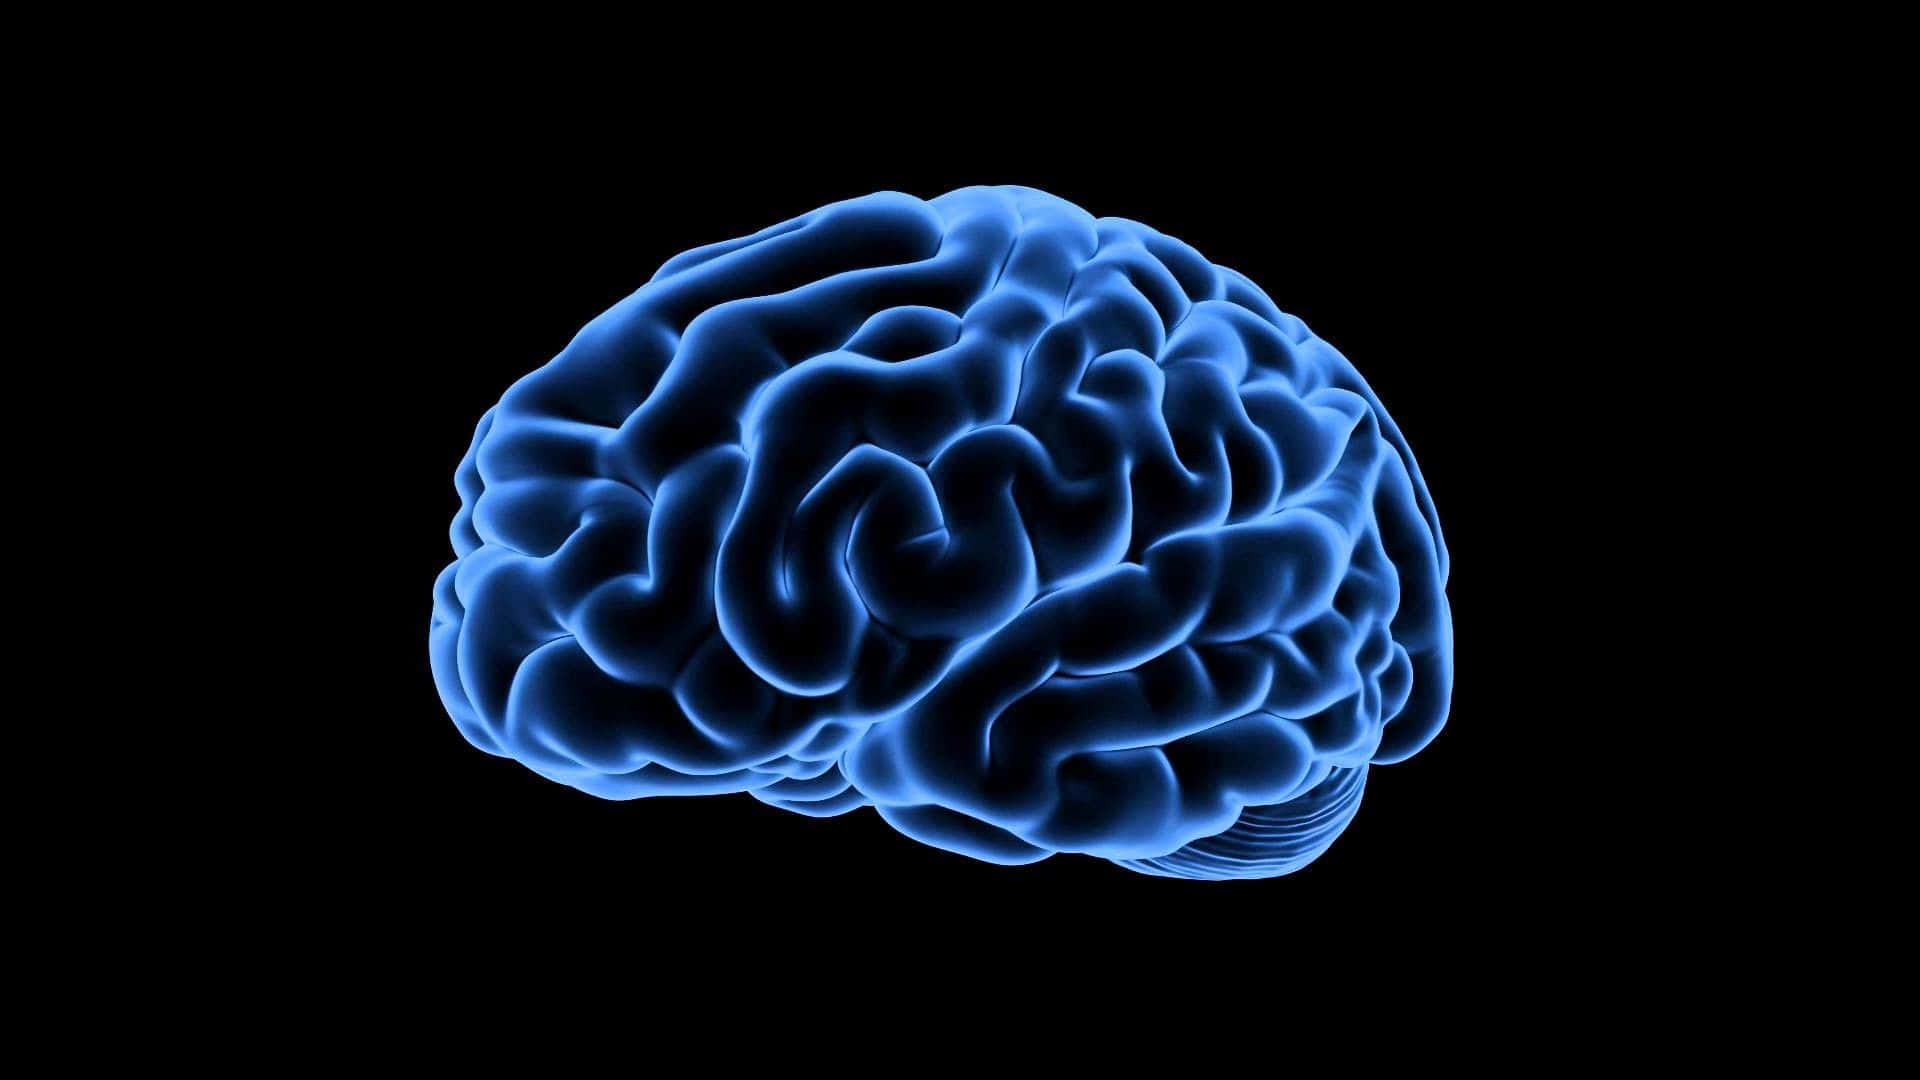 A Blue Human Brain On A Black Background Wallpaper